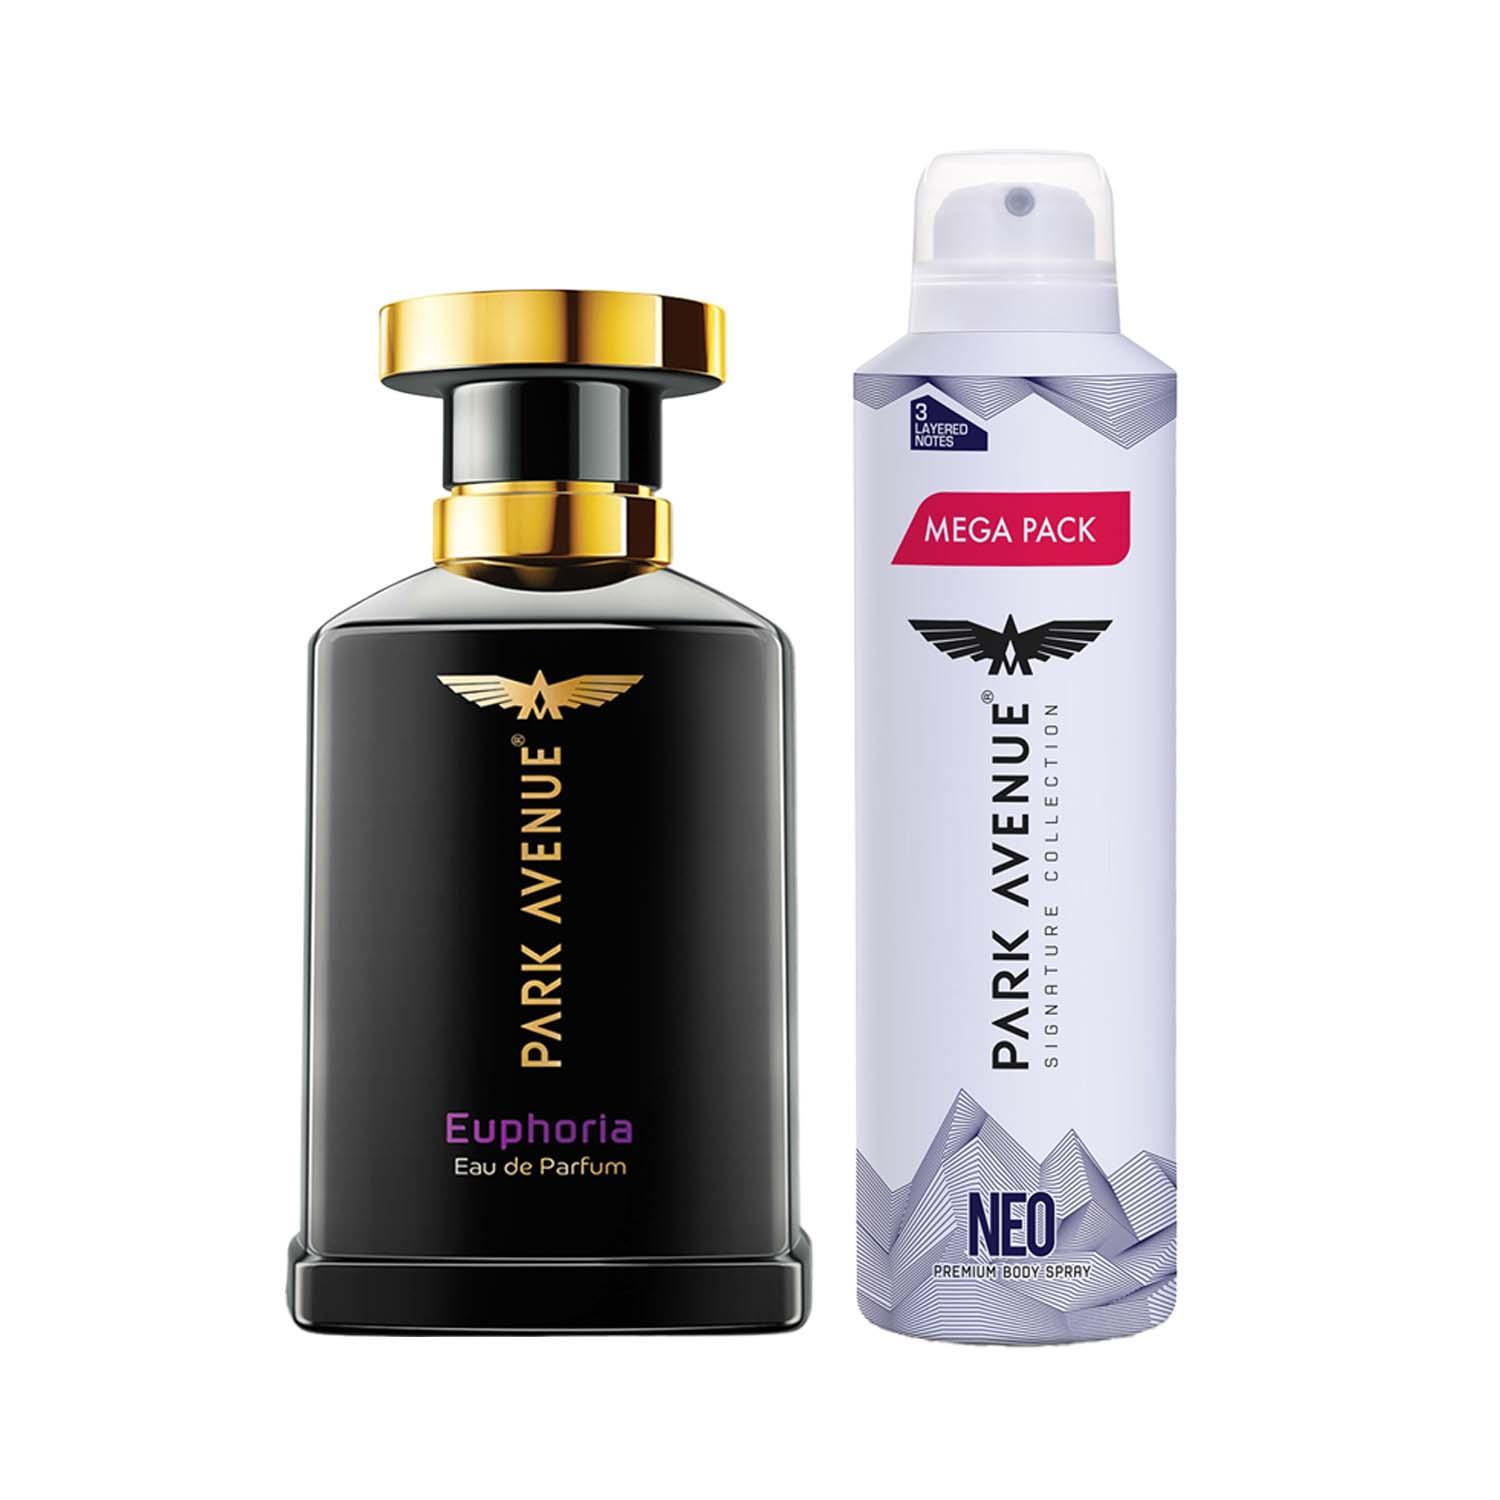 Park Avenue | Park Avenue Euphoria Eau De Parfum (100 ml) & Signature Collection Neo Premium Body Spray (220 ml)